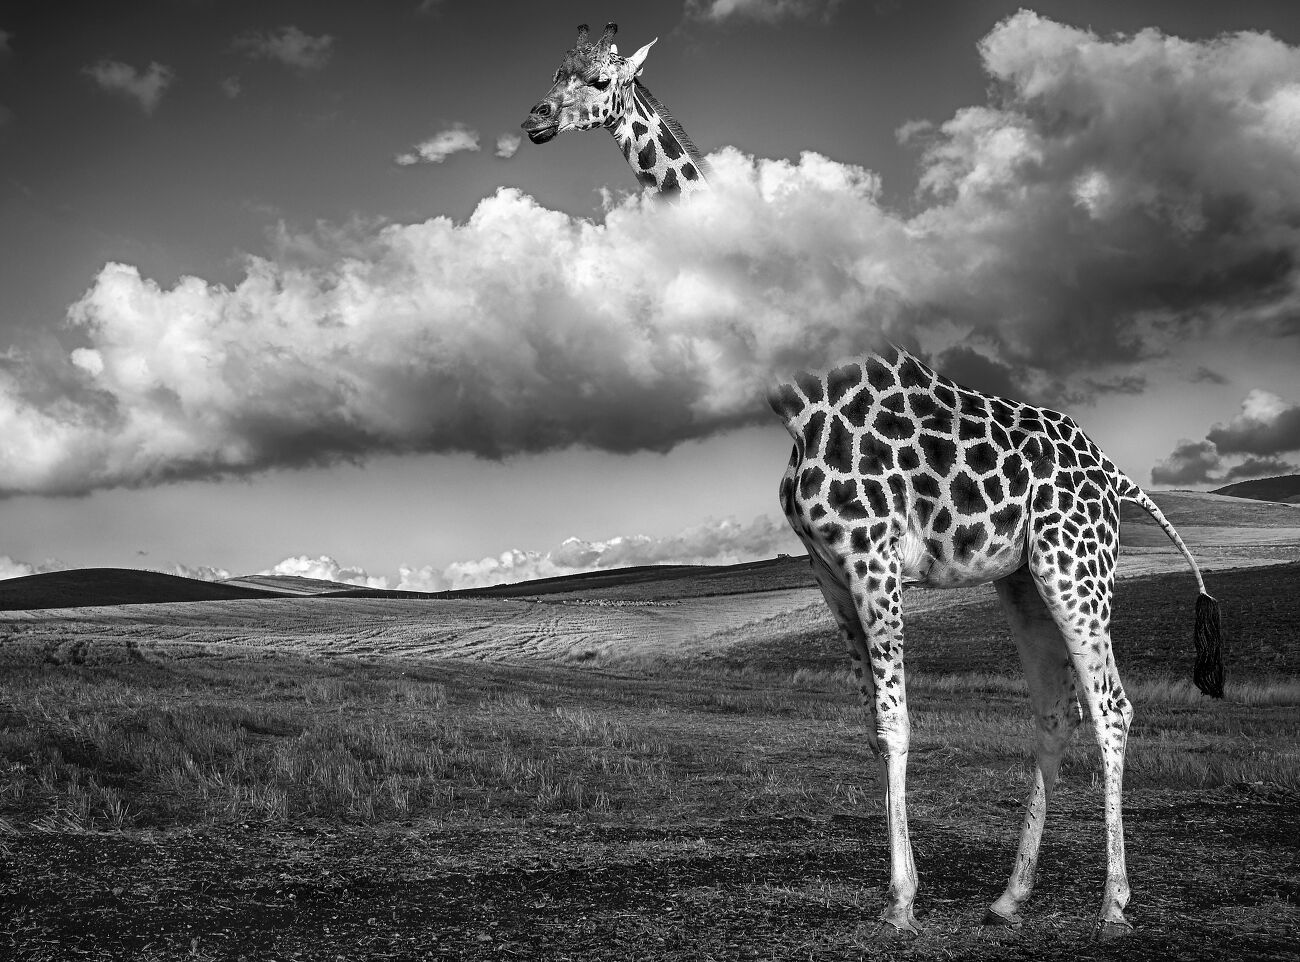 La girafe au dessus des nuages